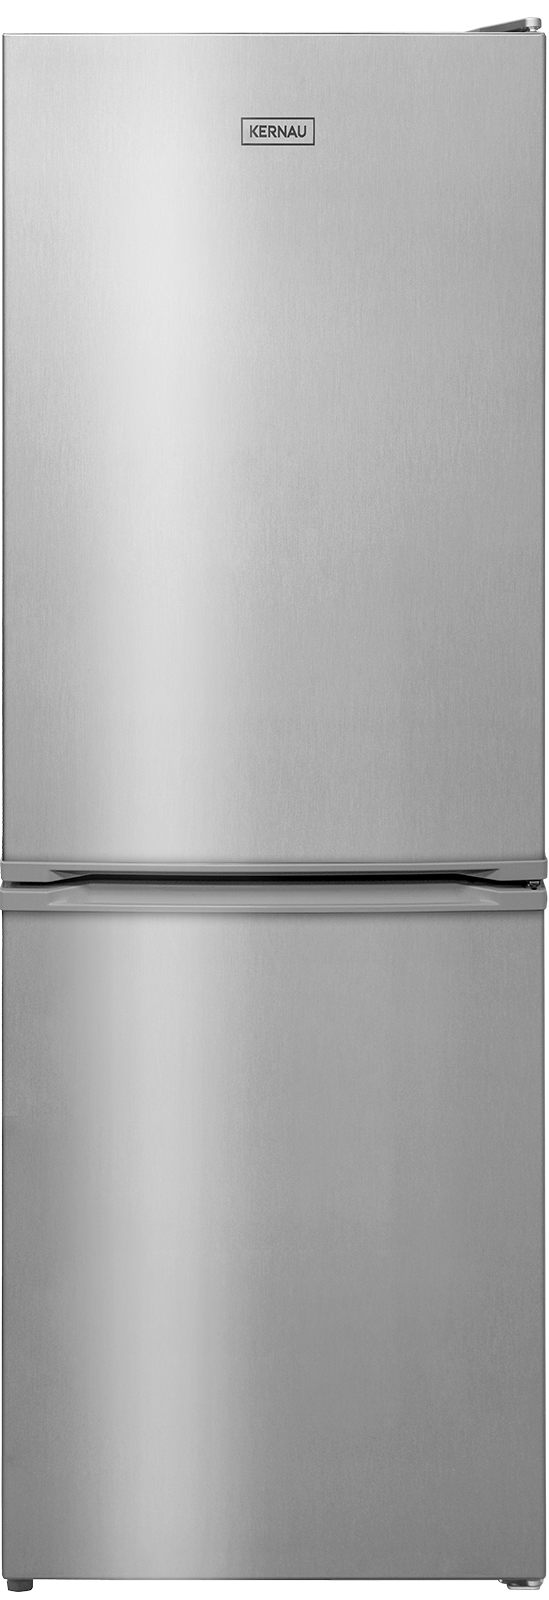 Двухкамерный холодильник KERNAU KFRC 15153 IX